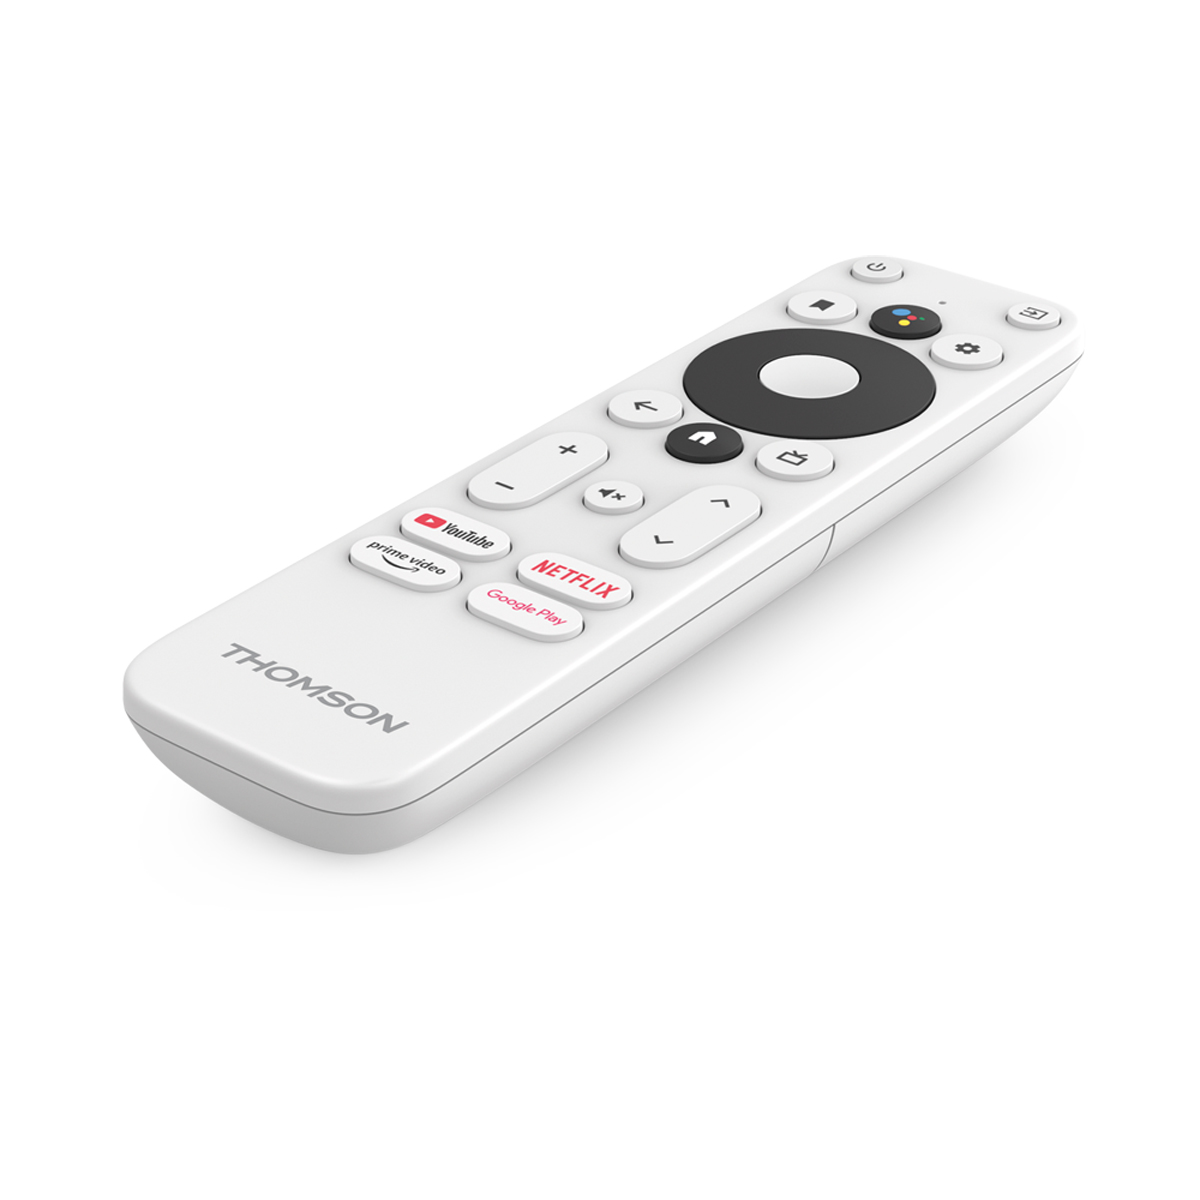 TV THA-100 Box mm 110 Android THOMSON 4K Streaming